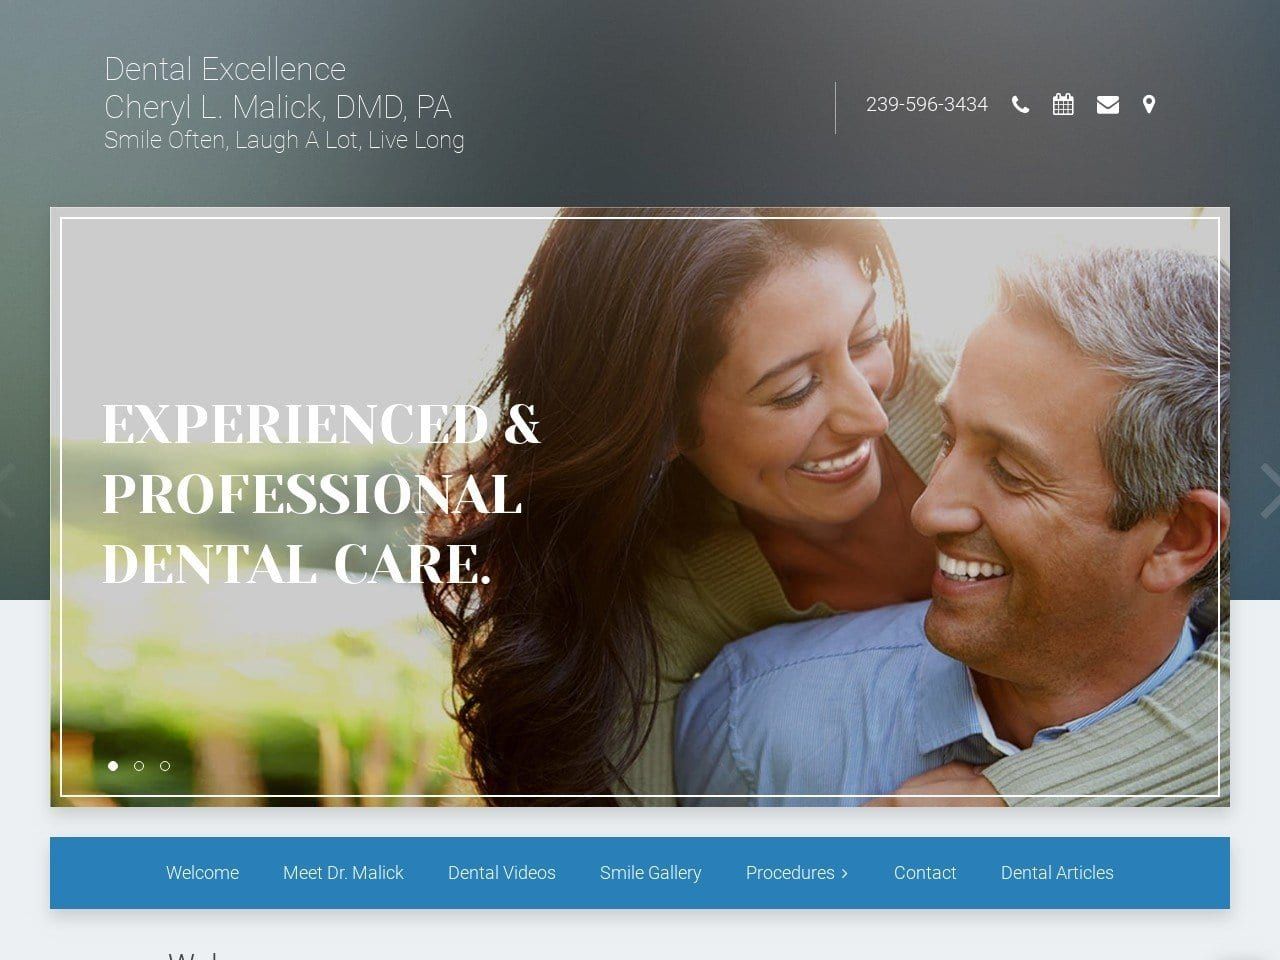 Naples Dental Excellence Website Screenshot from naplesdentalexcellence.com